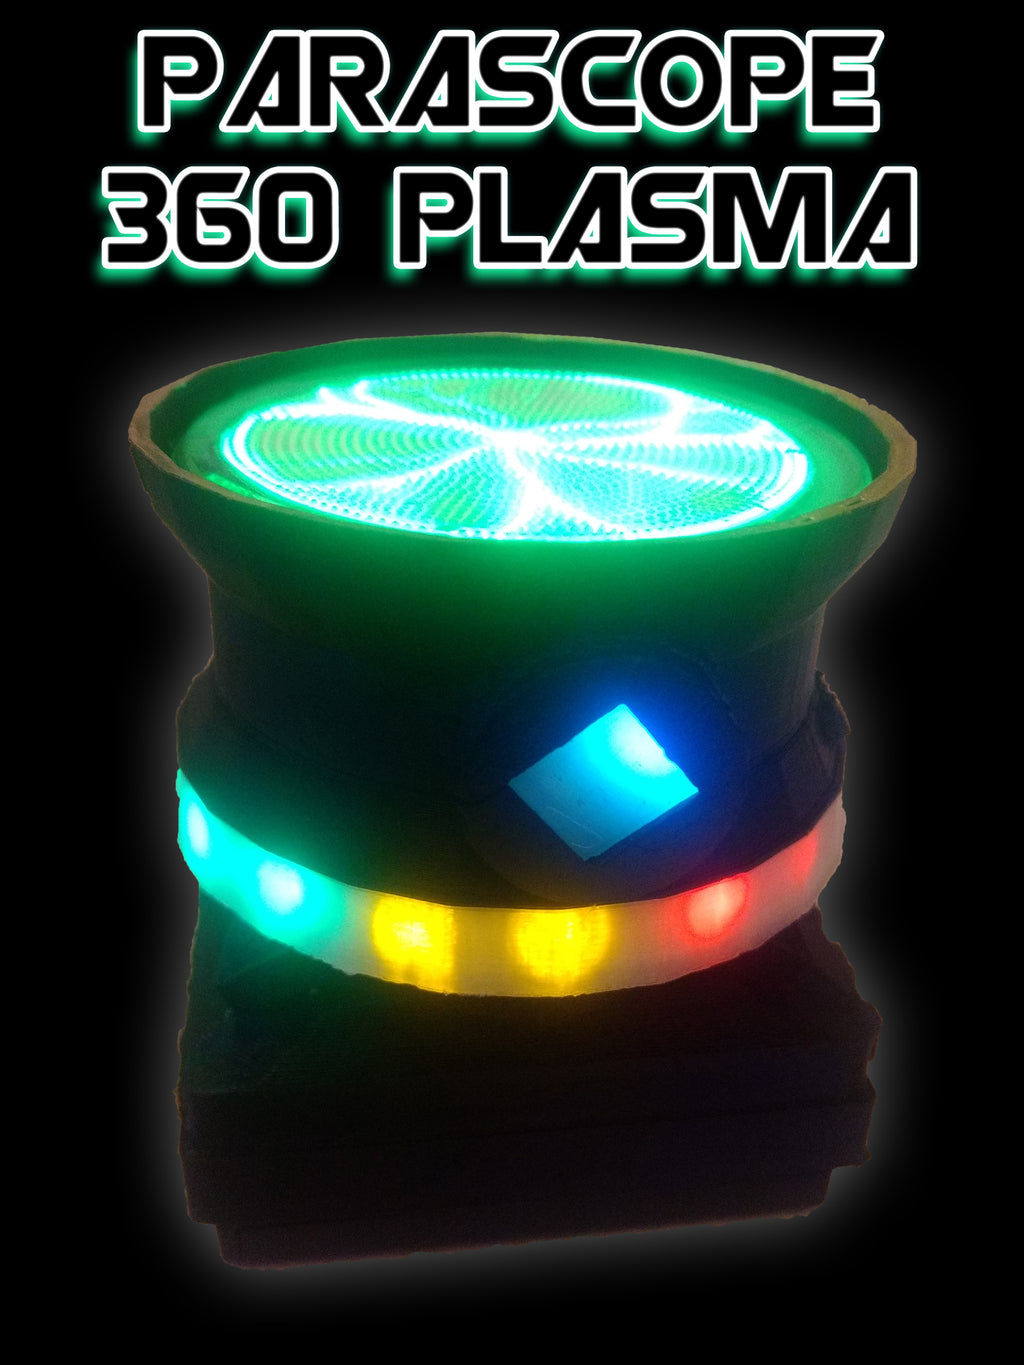 360 PARASCOPE PLASMA (360 Degree Triboelectric Field Meter)